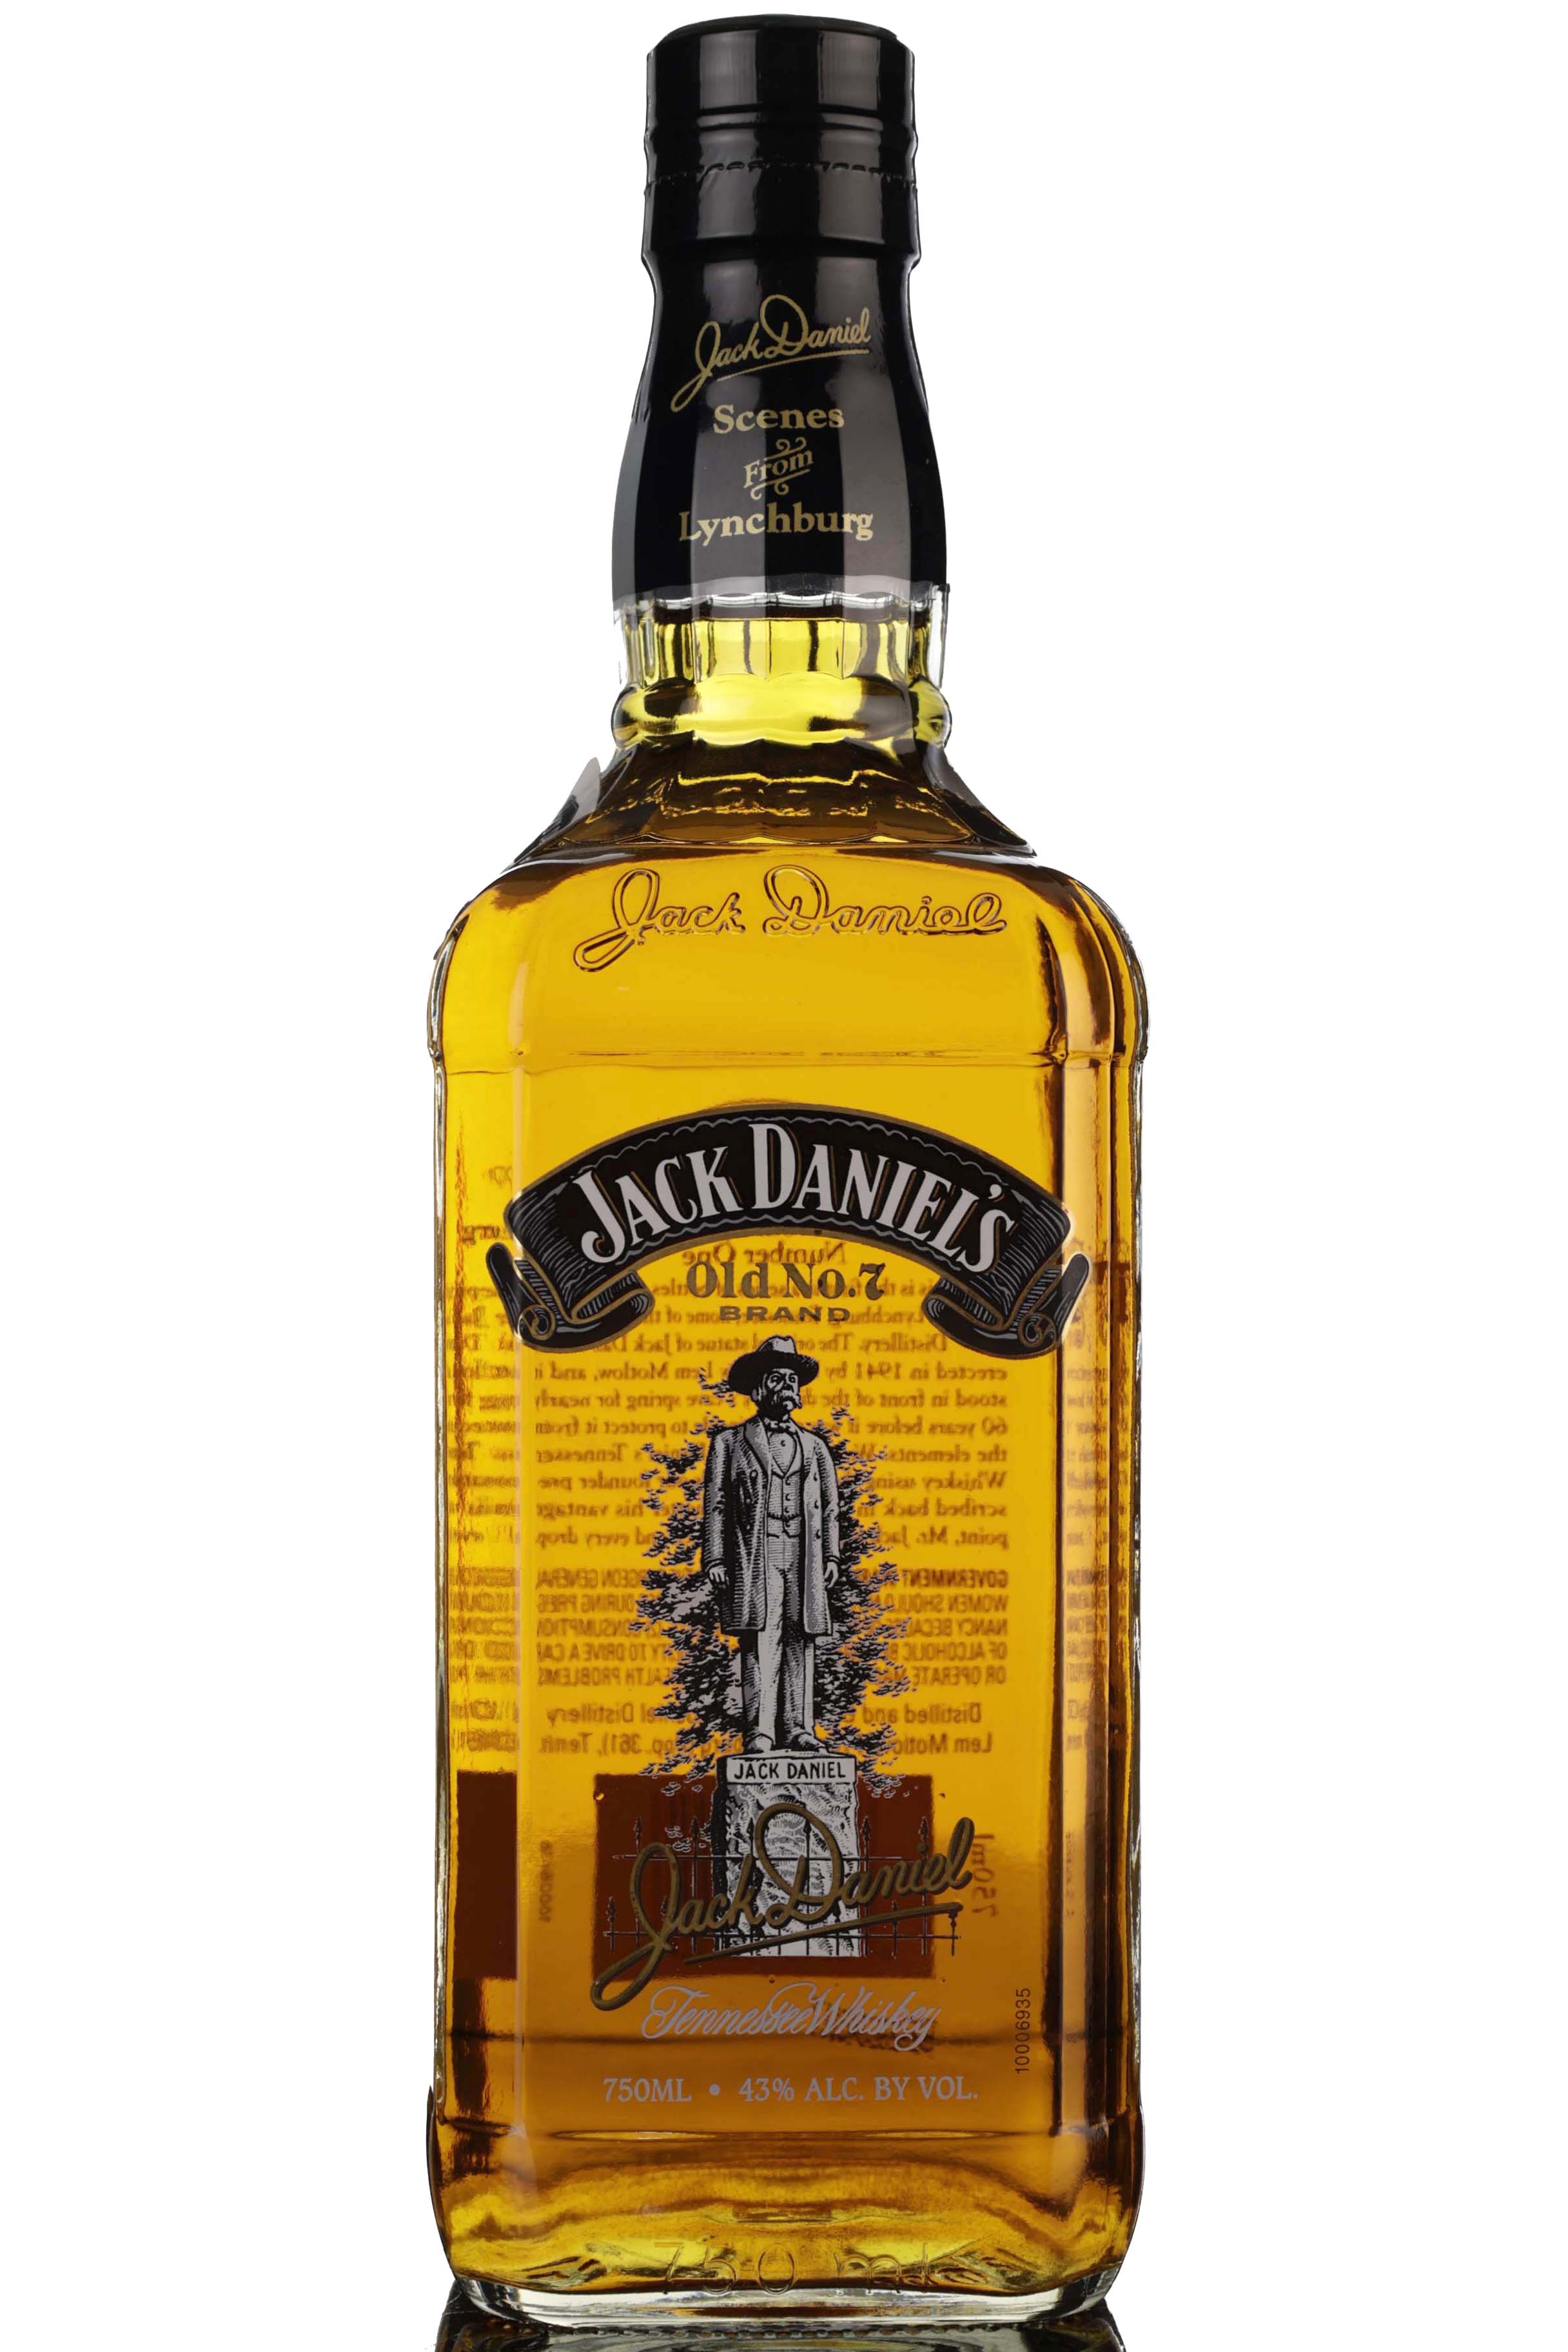 Jack Daniels Scenes From Lynchburg No1 - Signed Bottle